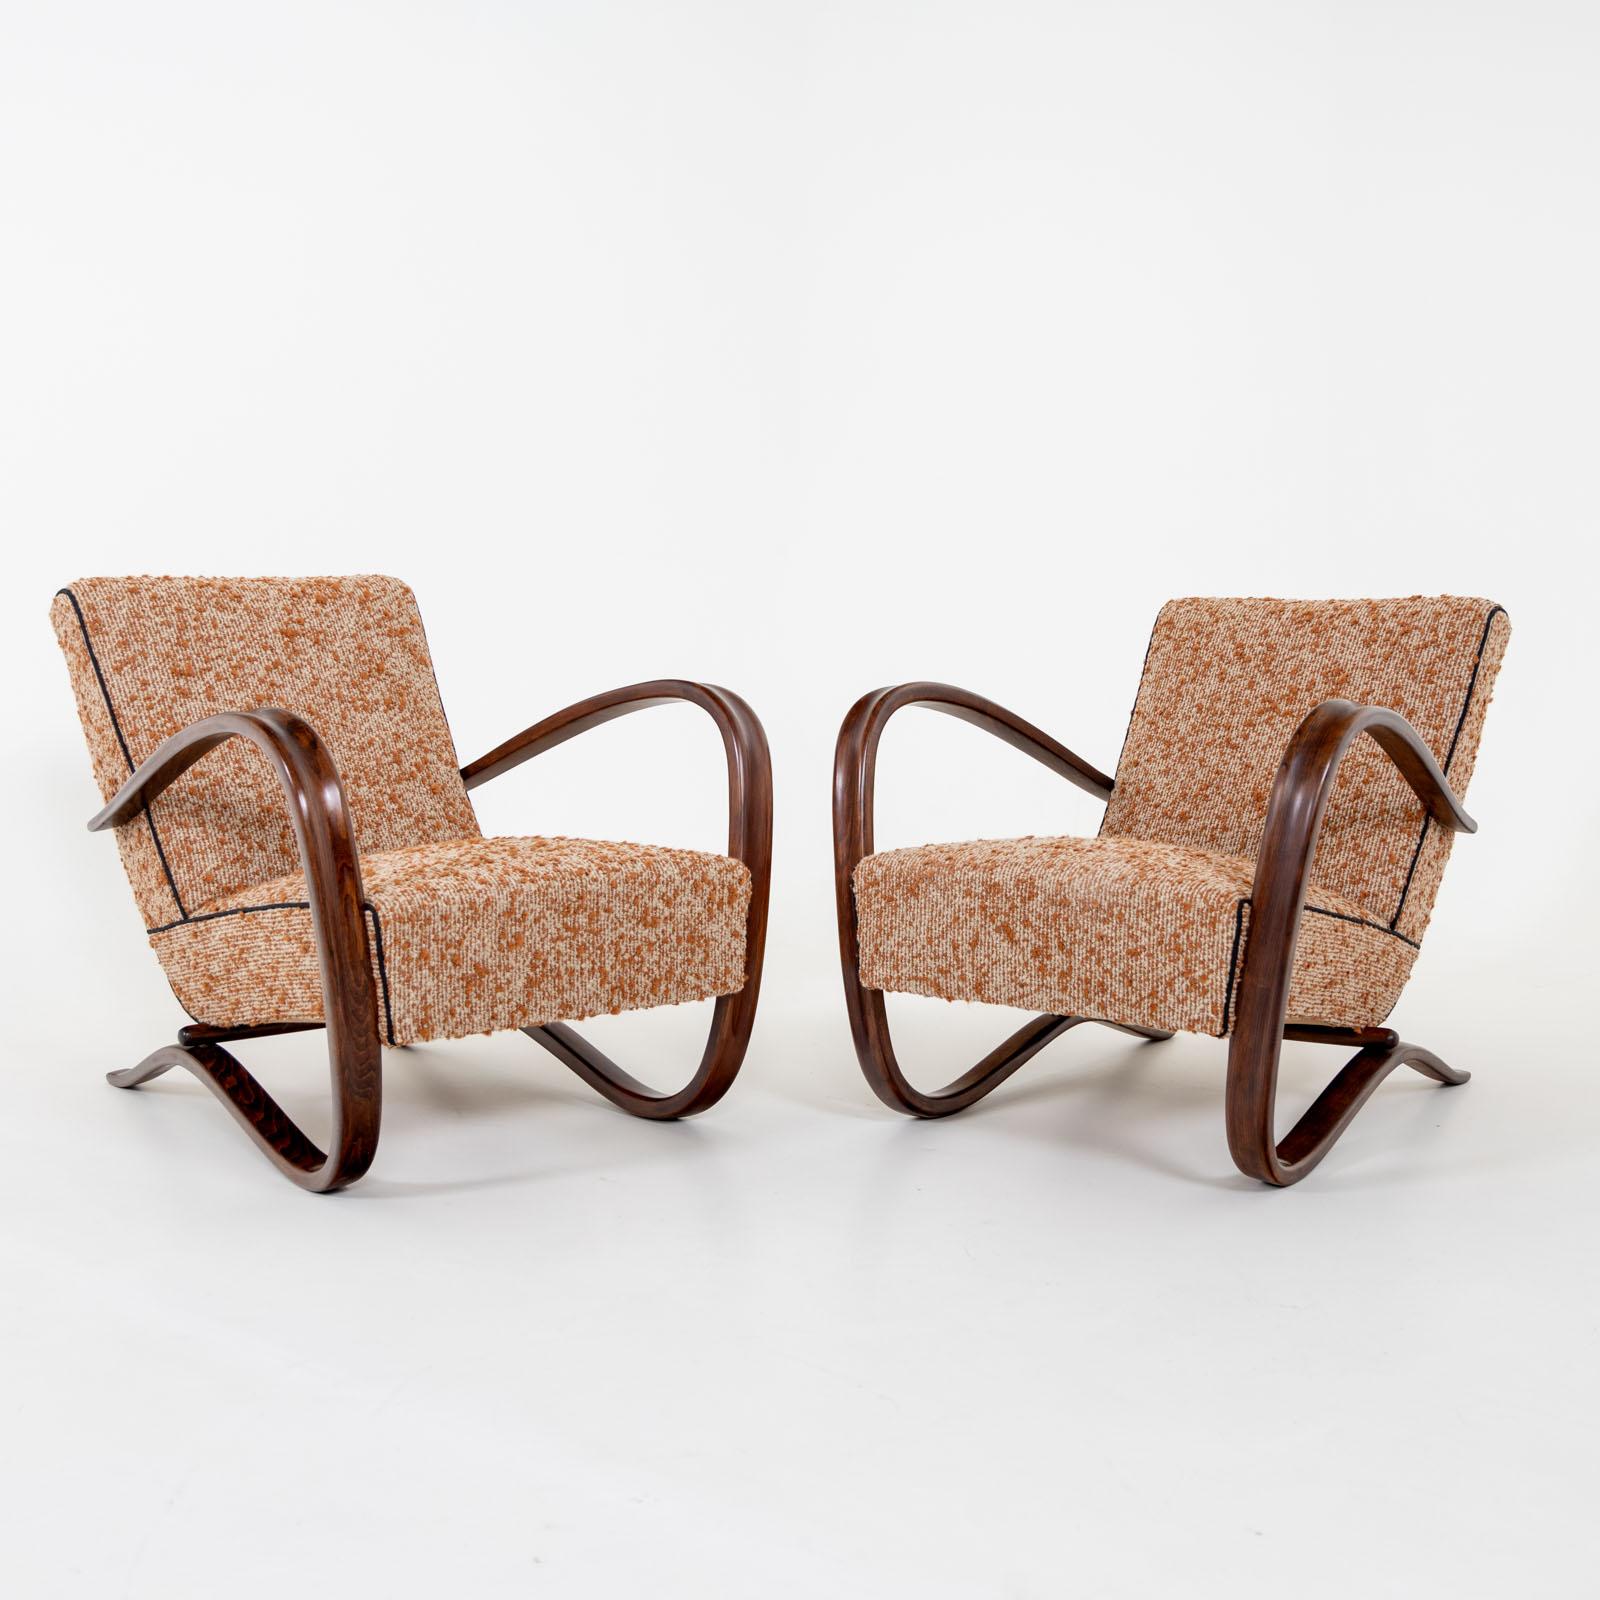 Art Deco Pair of H-269 Lounge Chairs by Jindřich Halabala, Czech Republic 1930s For Sale